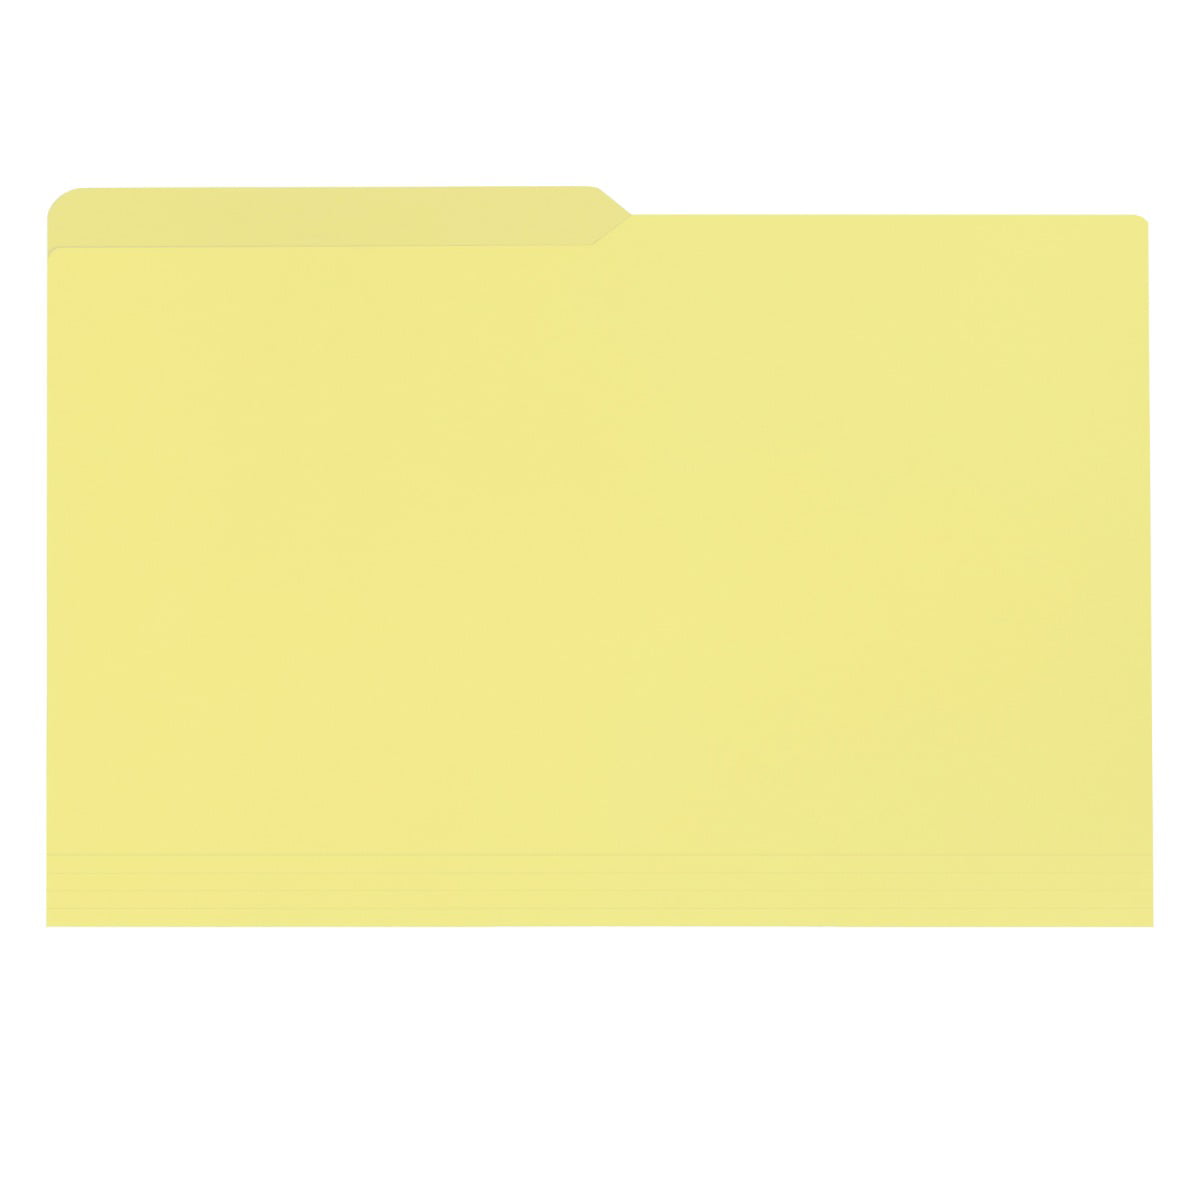 YELLOW Cardstock End Tab Folder - BARKLEYﾙ COMPATIBLE (ETF229Y)